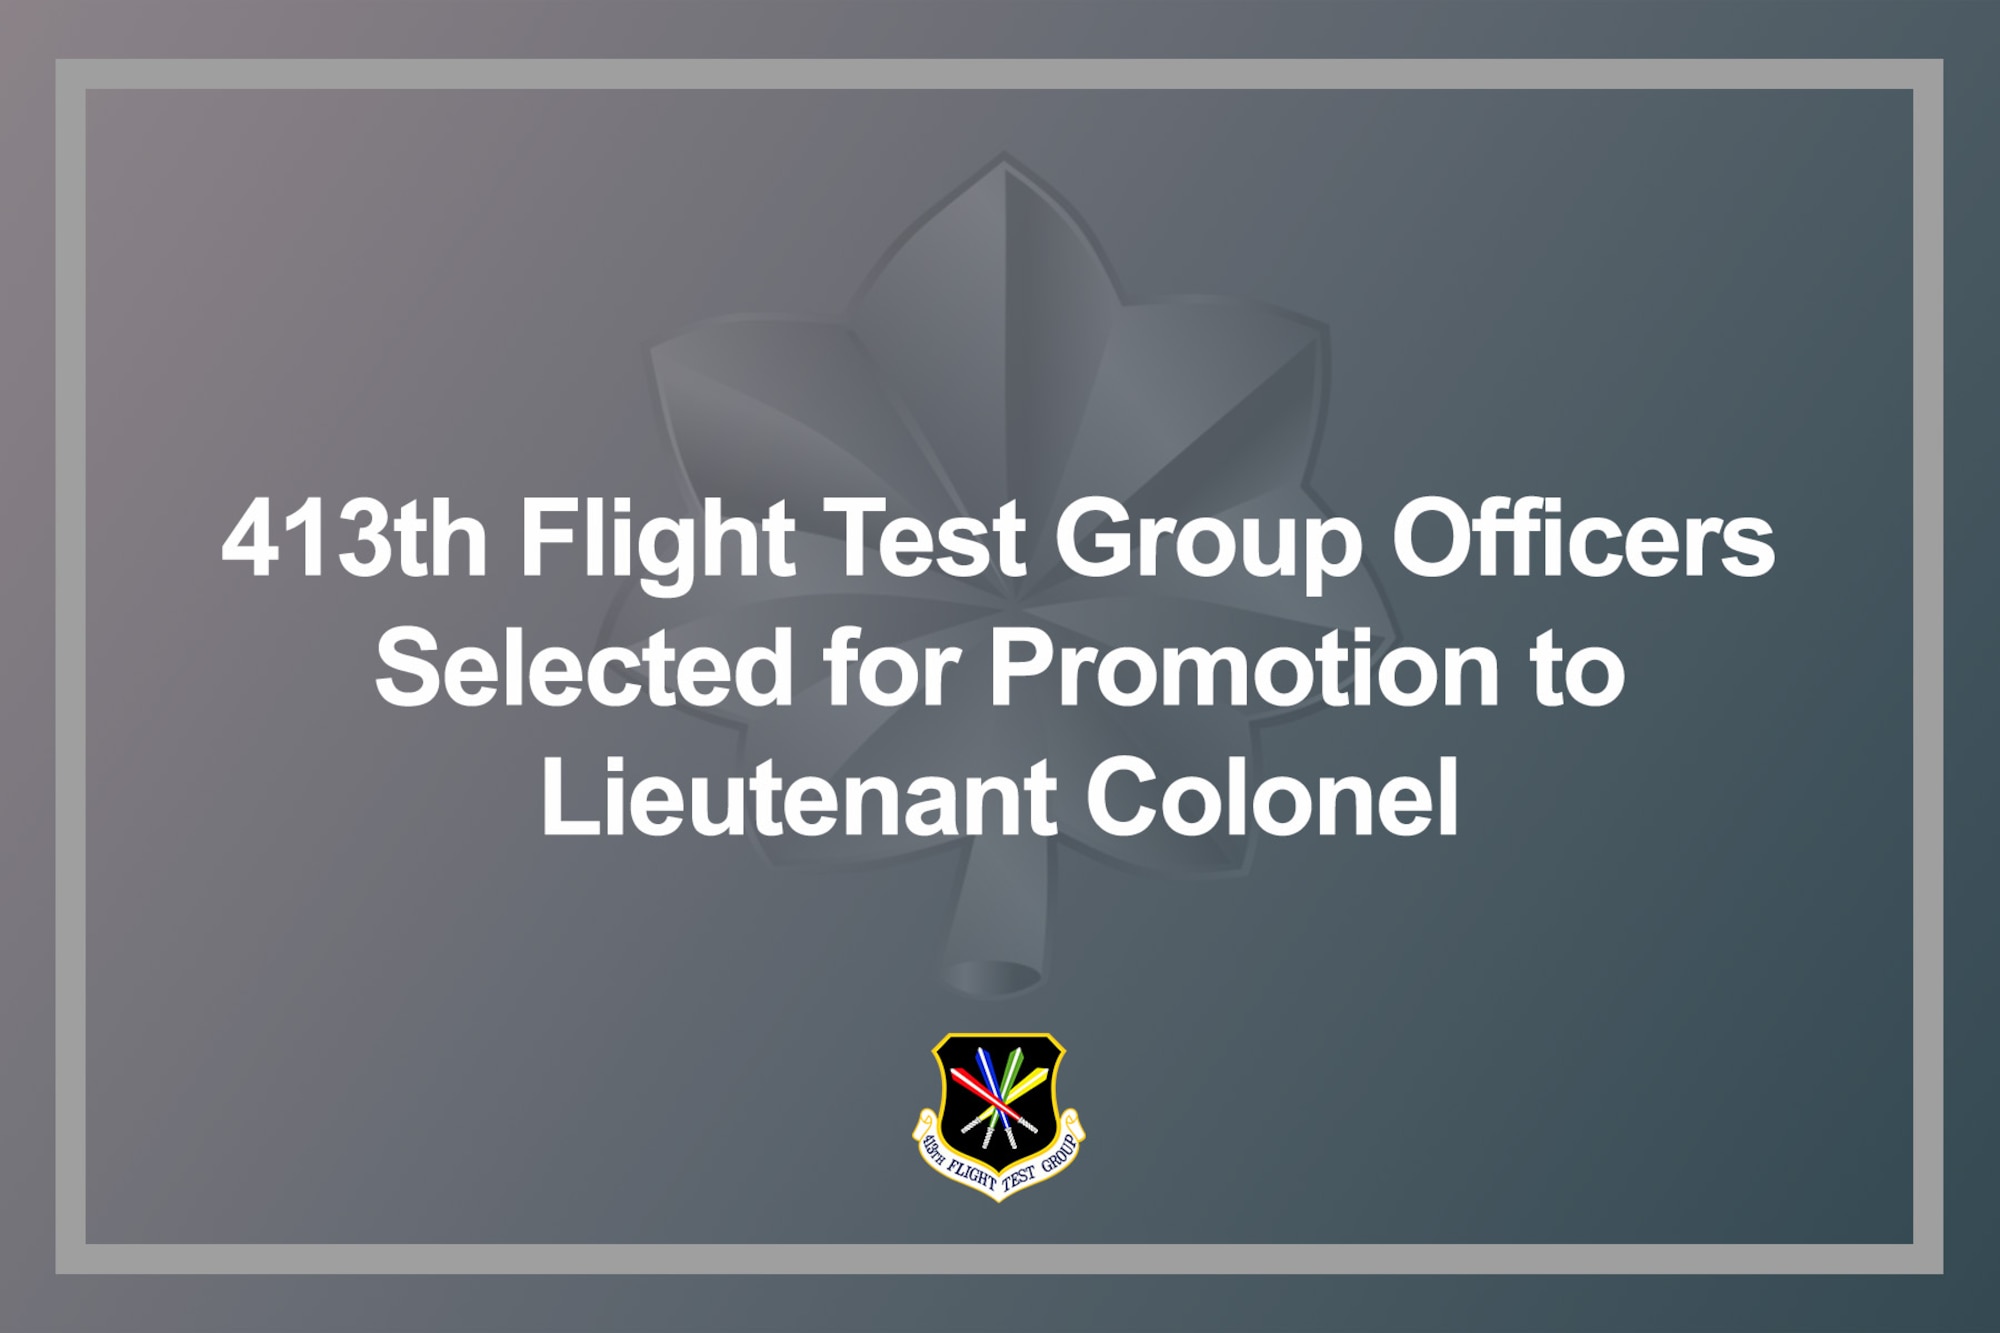 Lt. Col. promotions